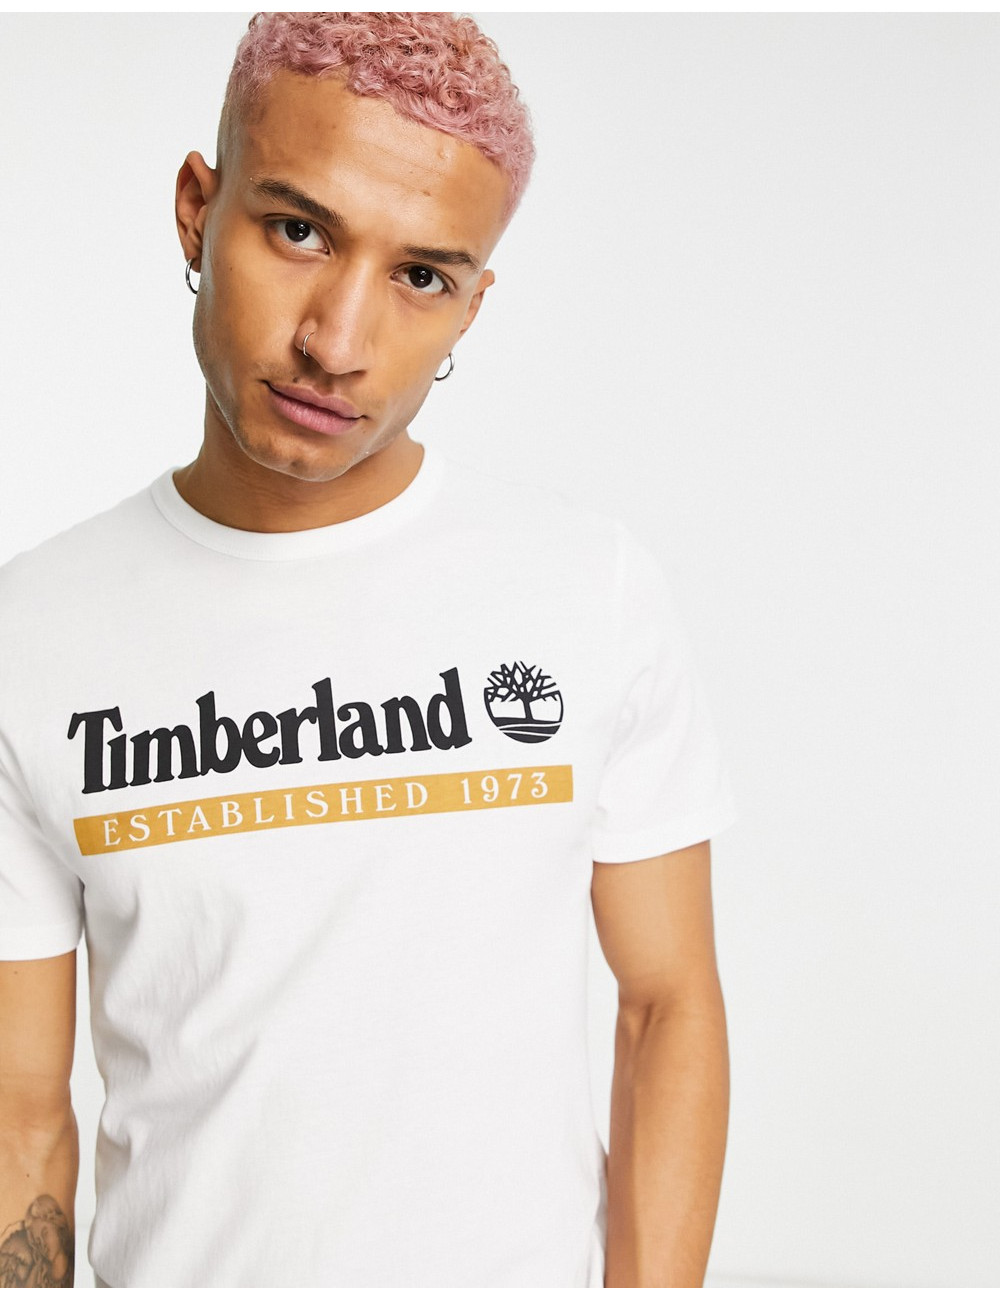 Timberland Established 1973...